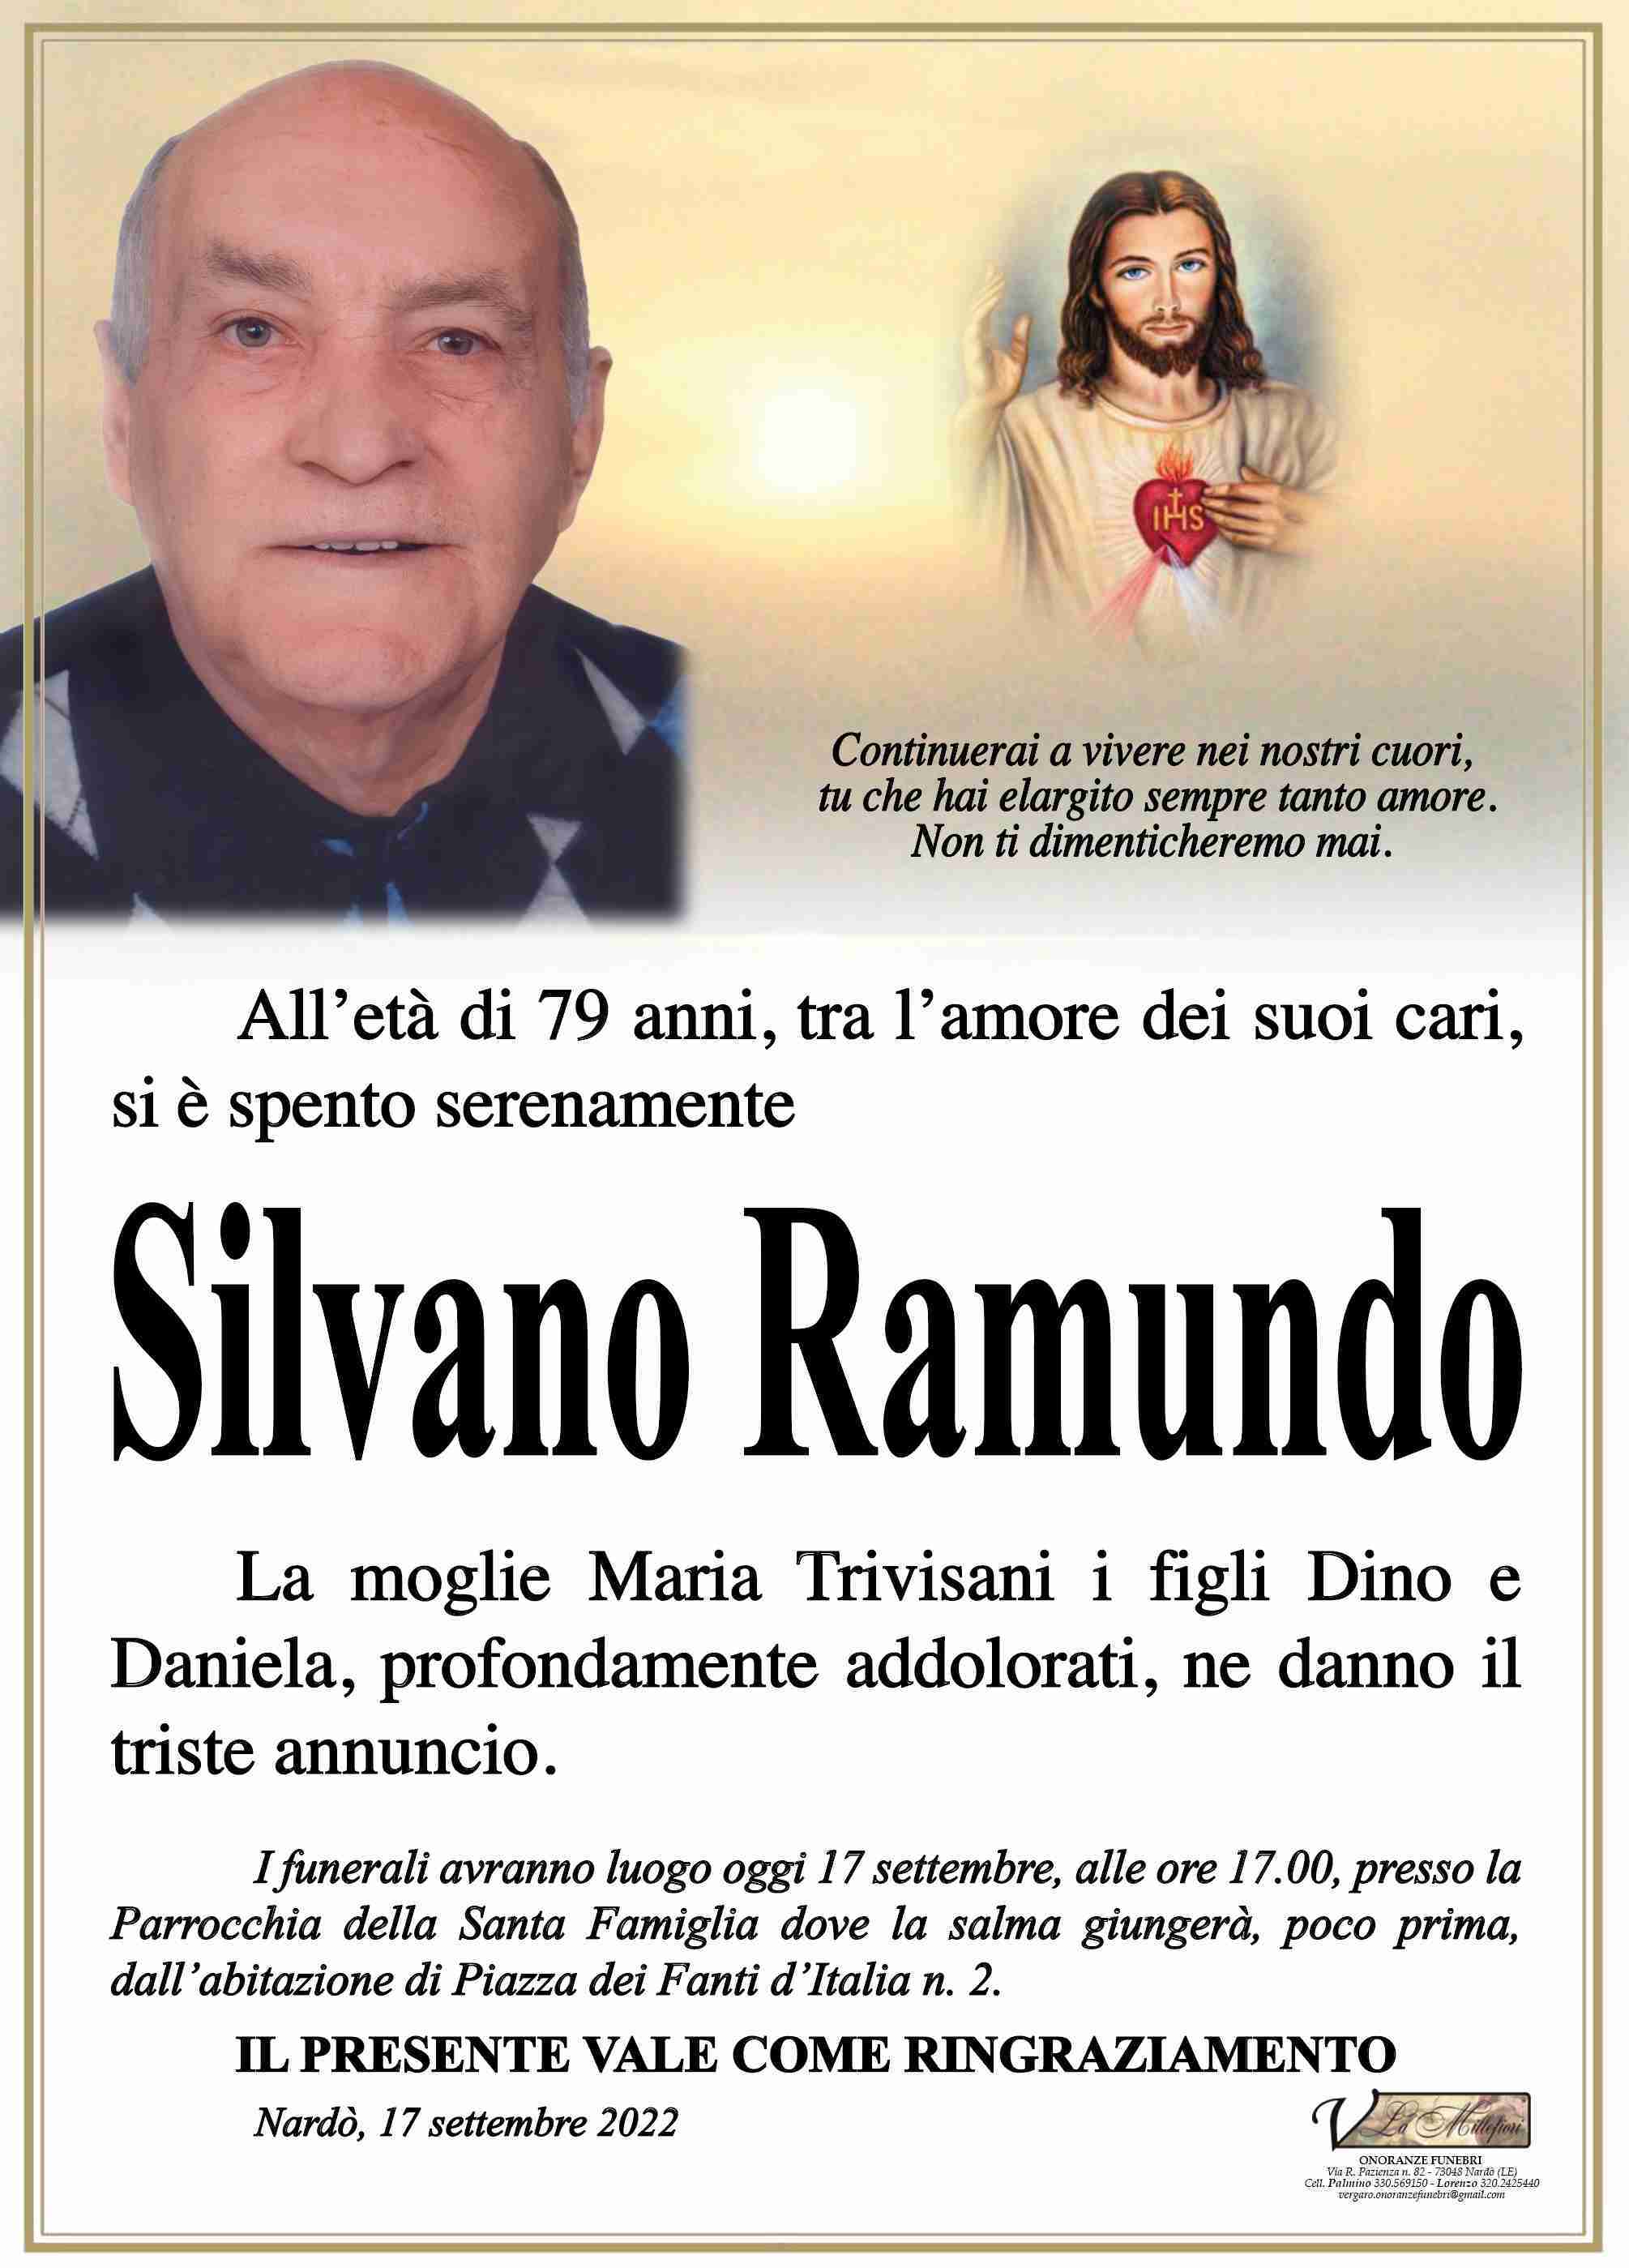 Silvano Ramundo